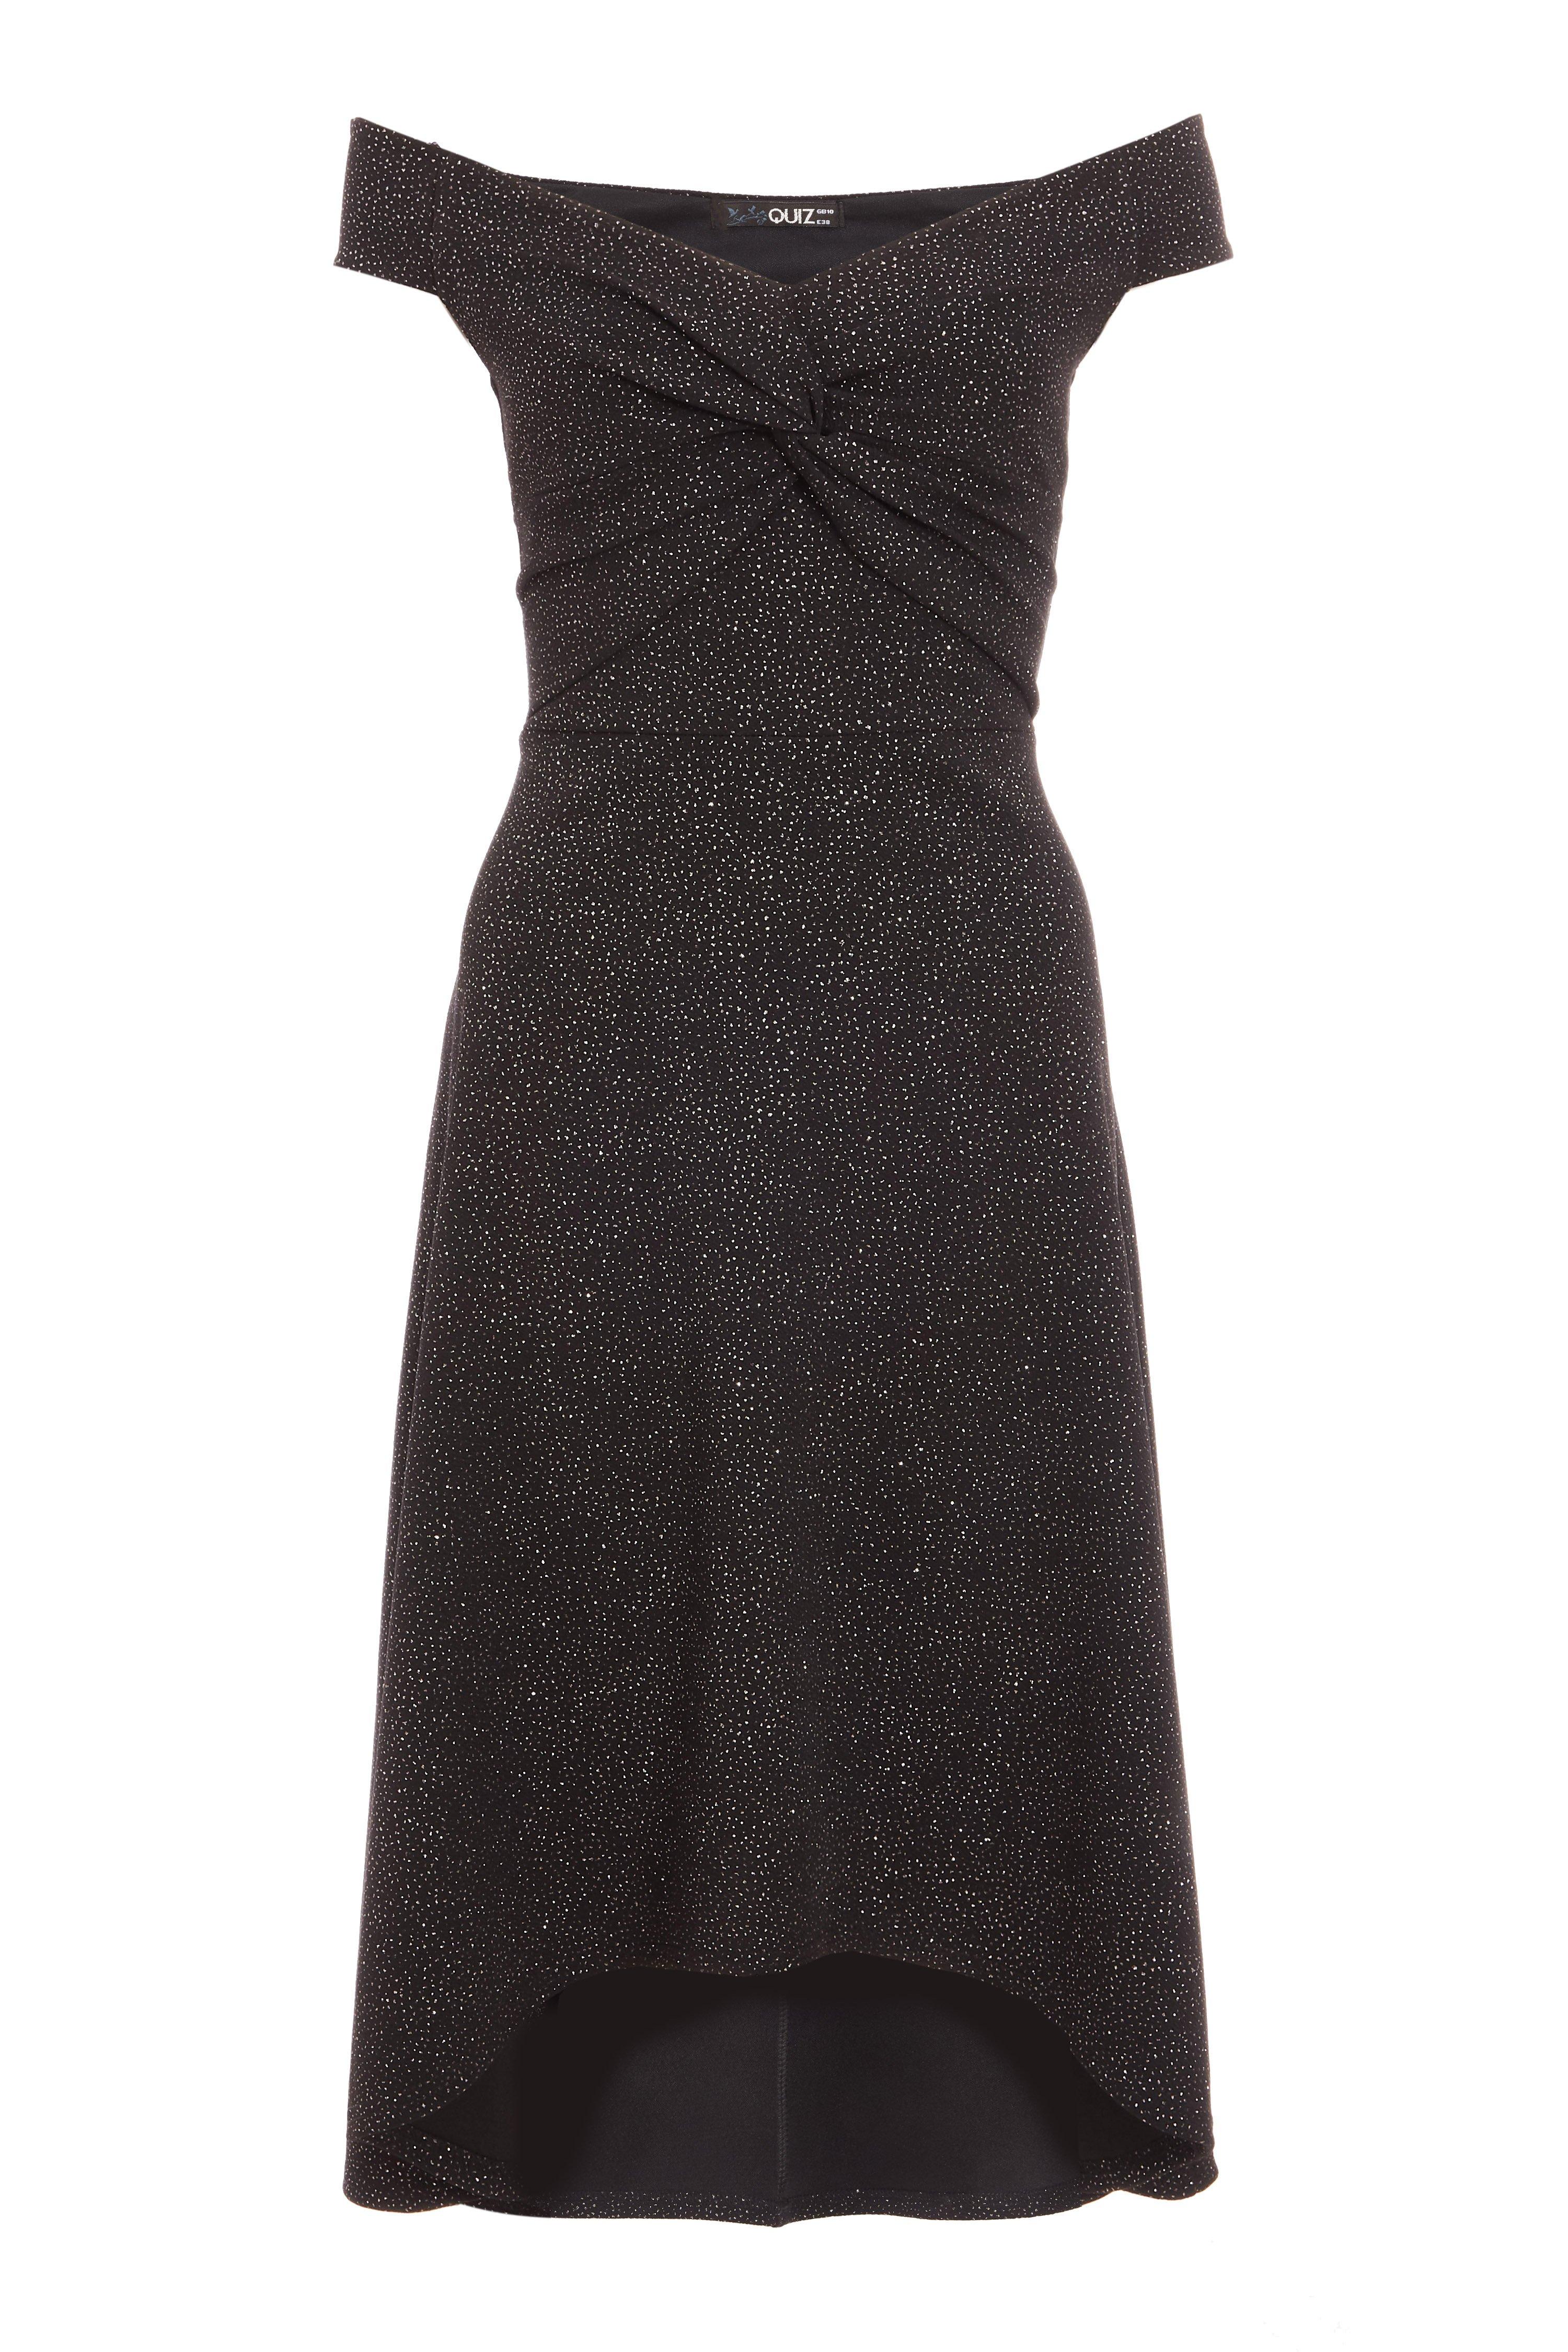 Black Bardot Knot Front Glitter Dip Hem Dress - Quiz Clothing